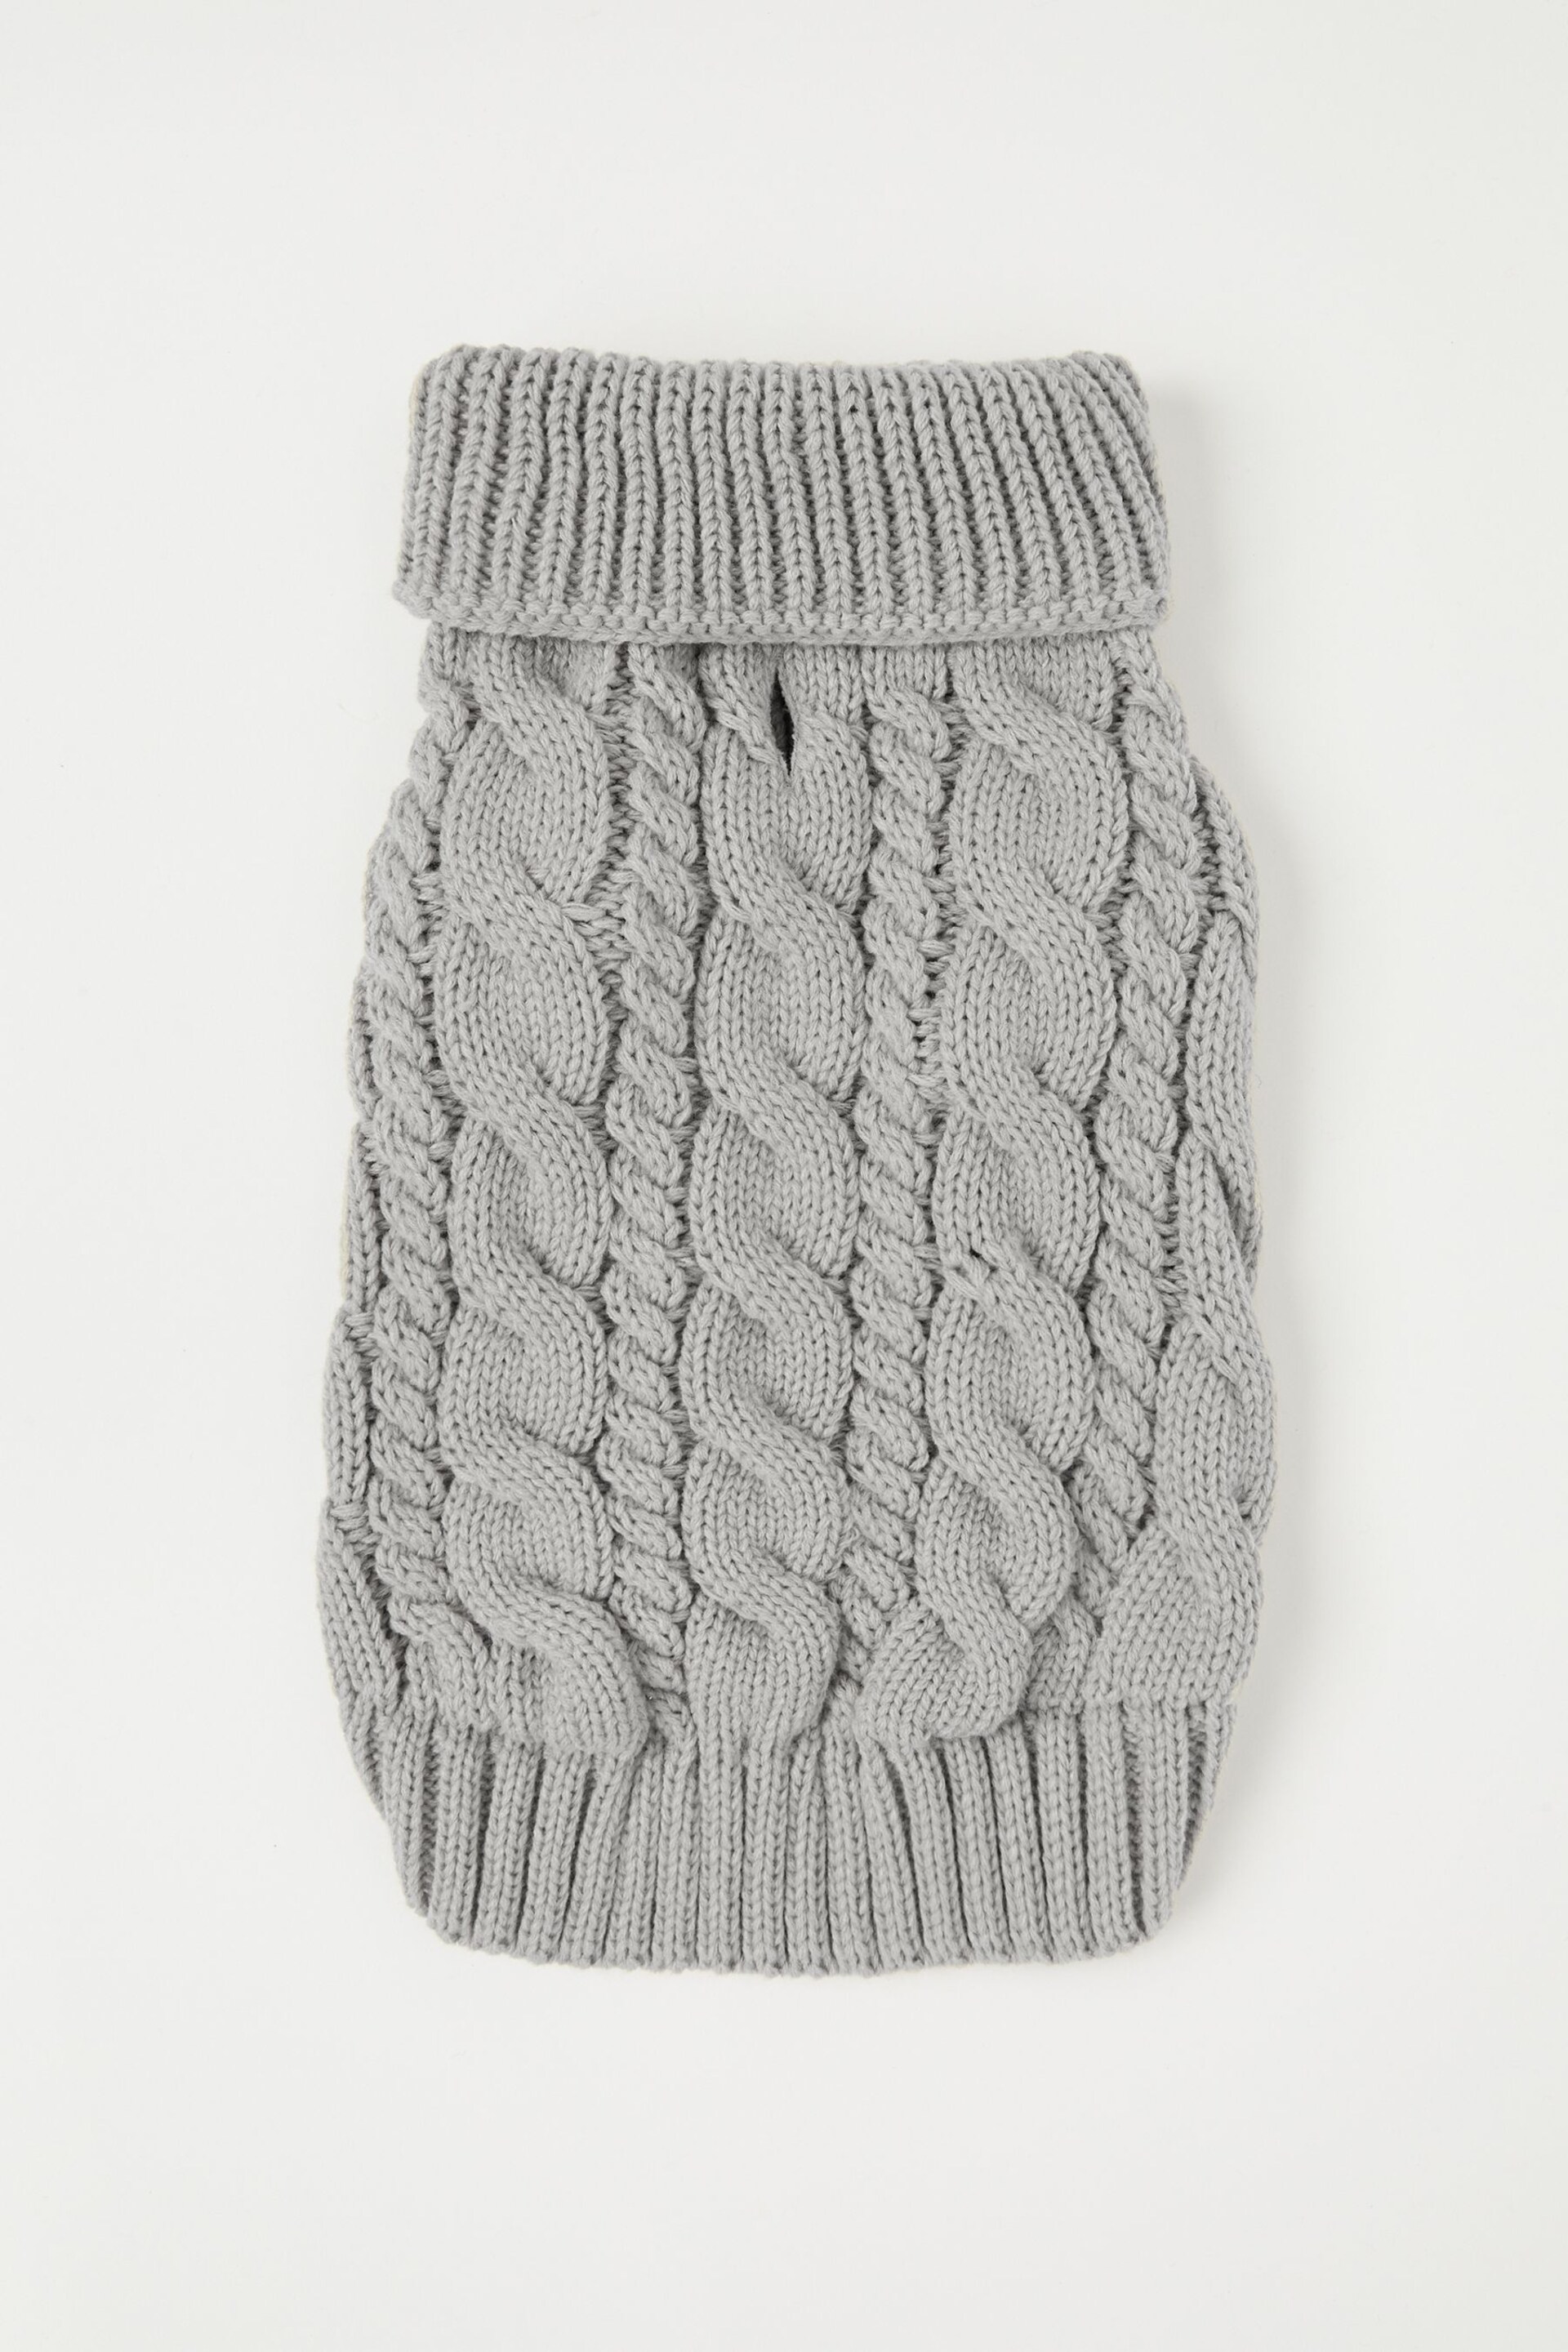 Lipsy Grey Super Soft Cable Knit Dog Jumper - Image 3 of 3